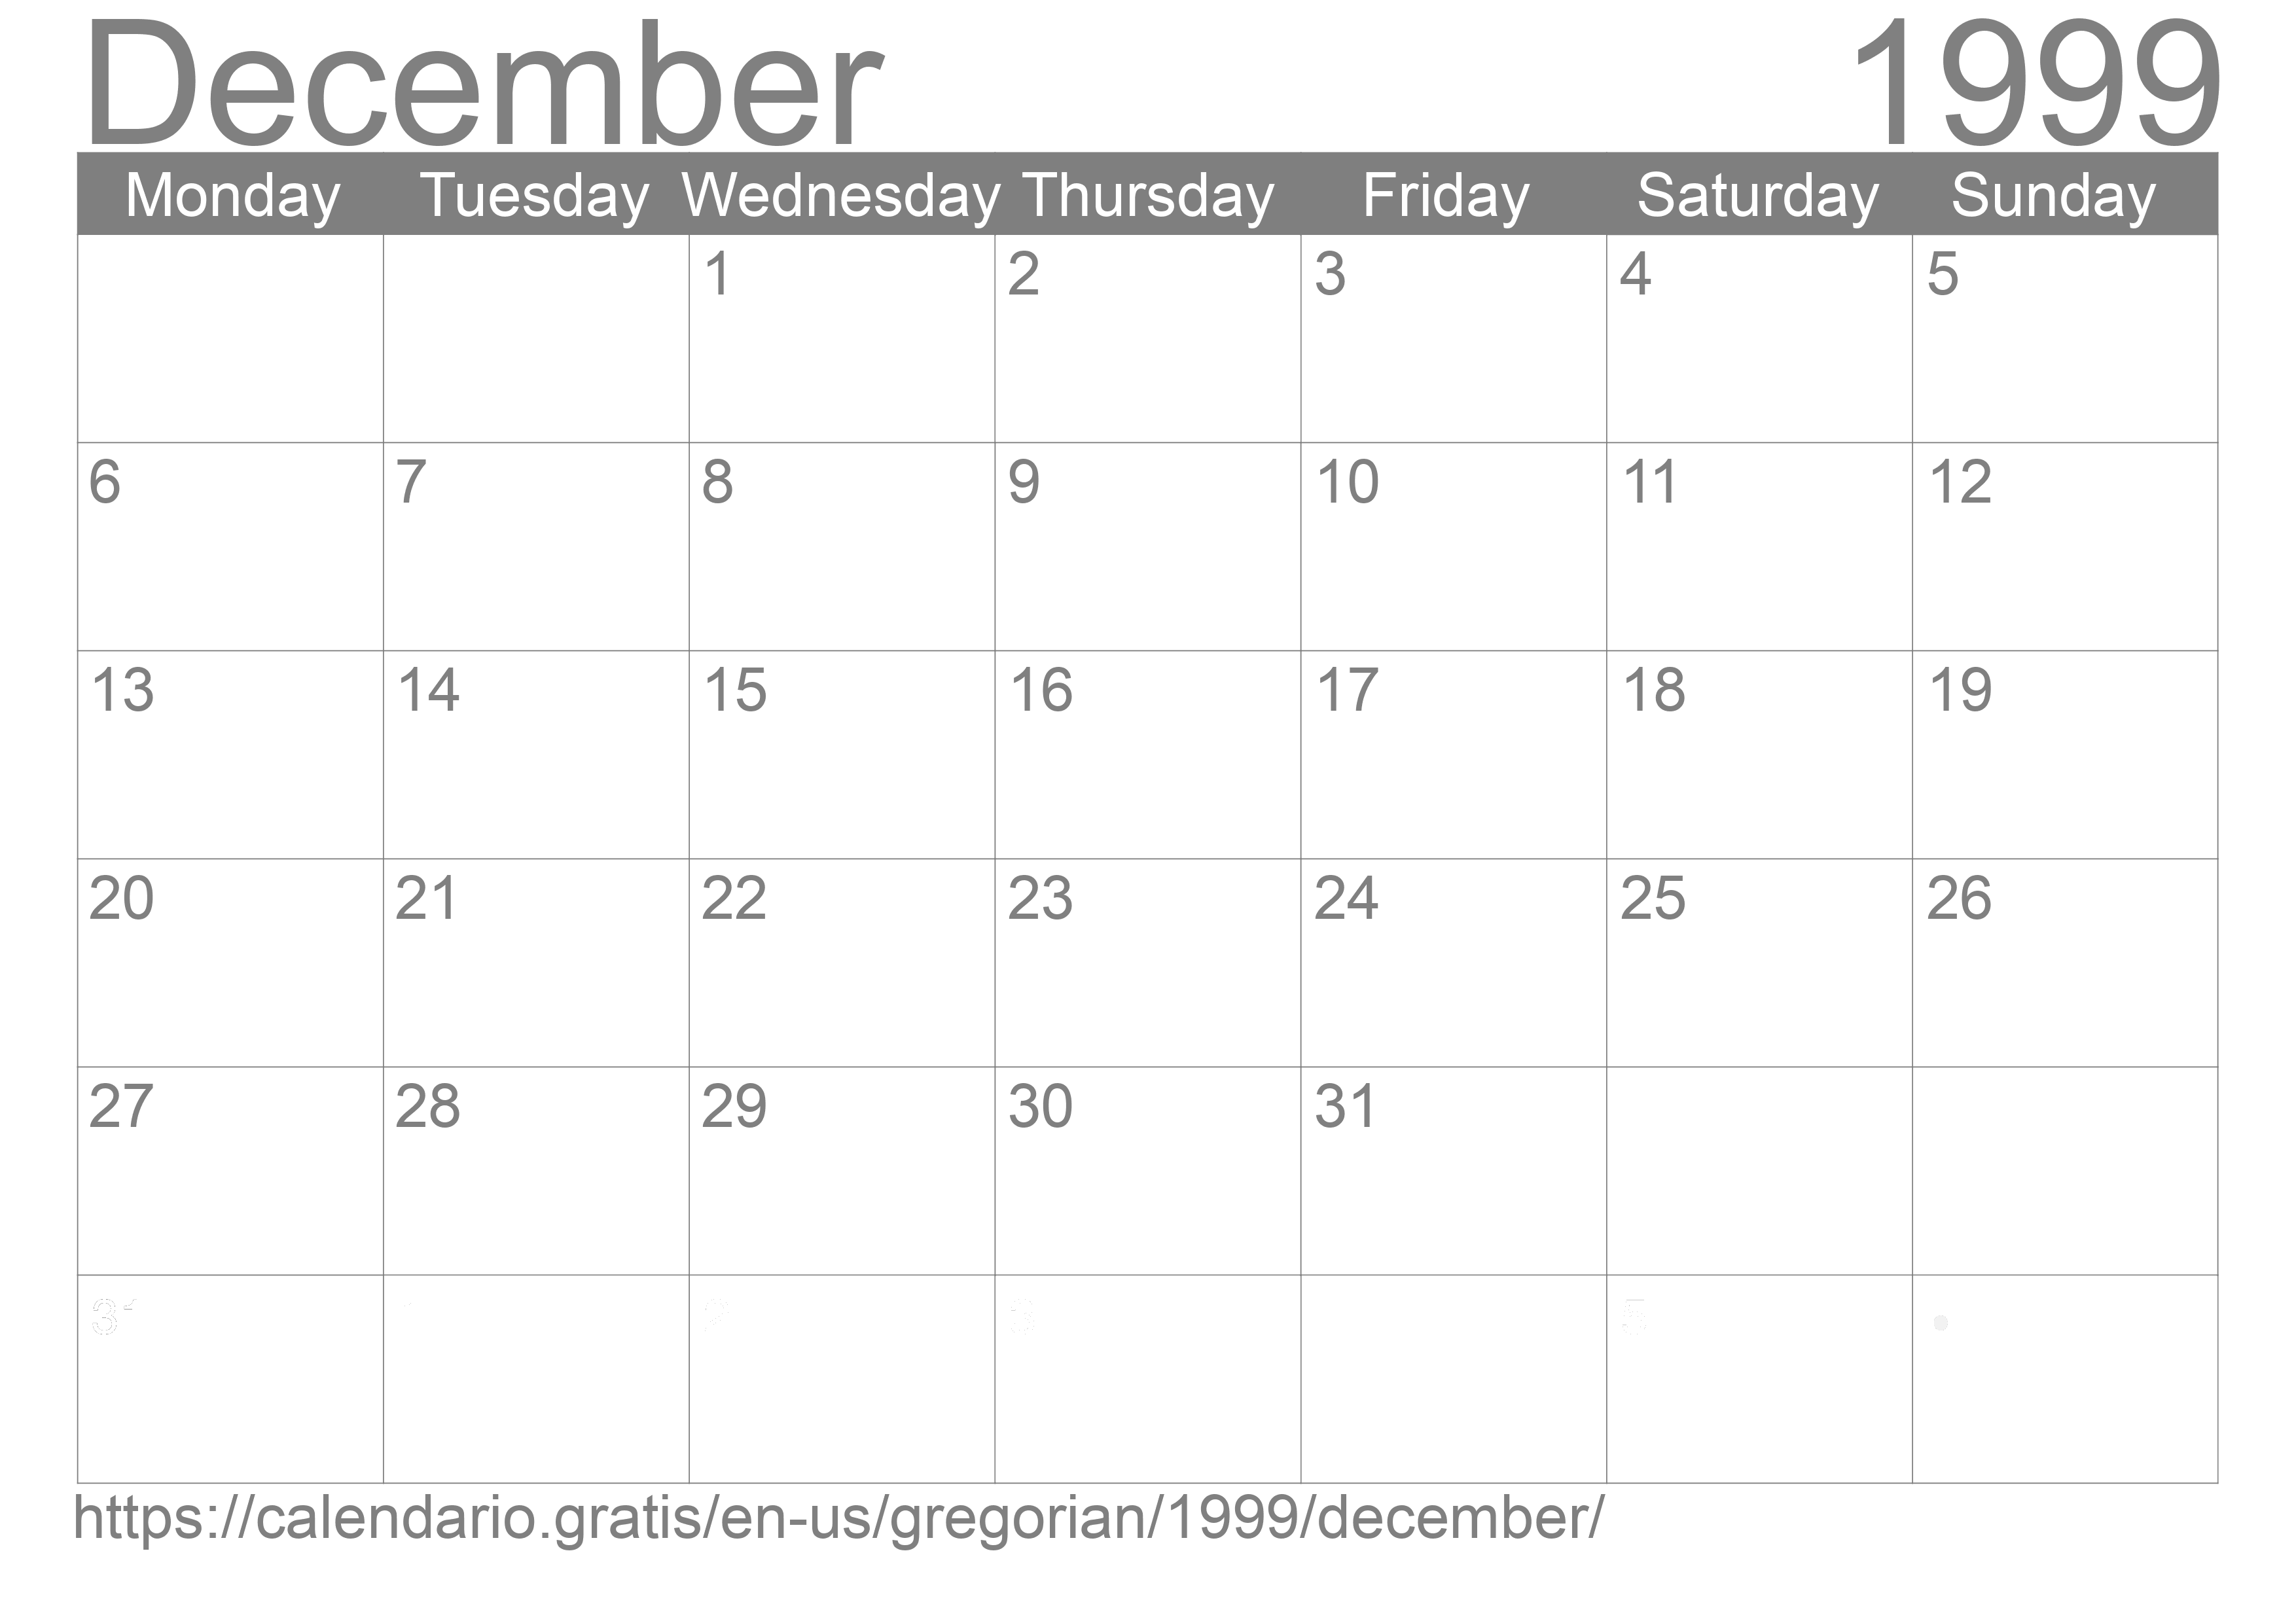 Calendar December 1999 to print